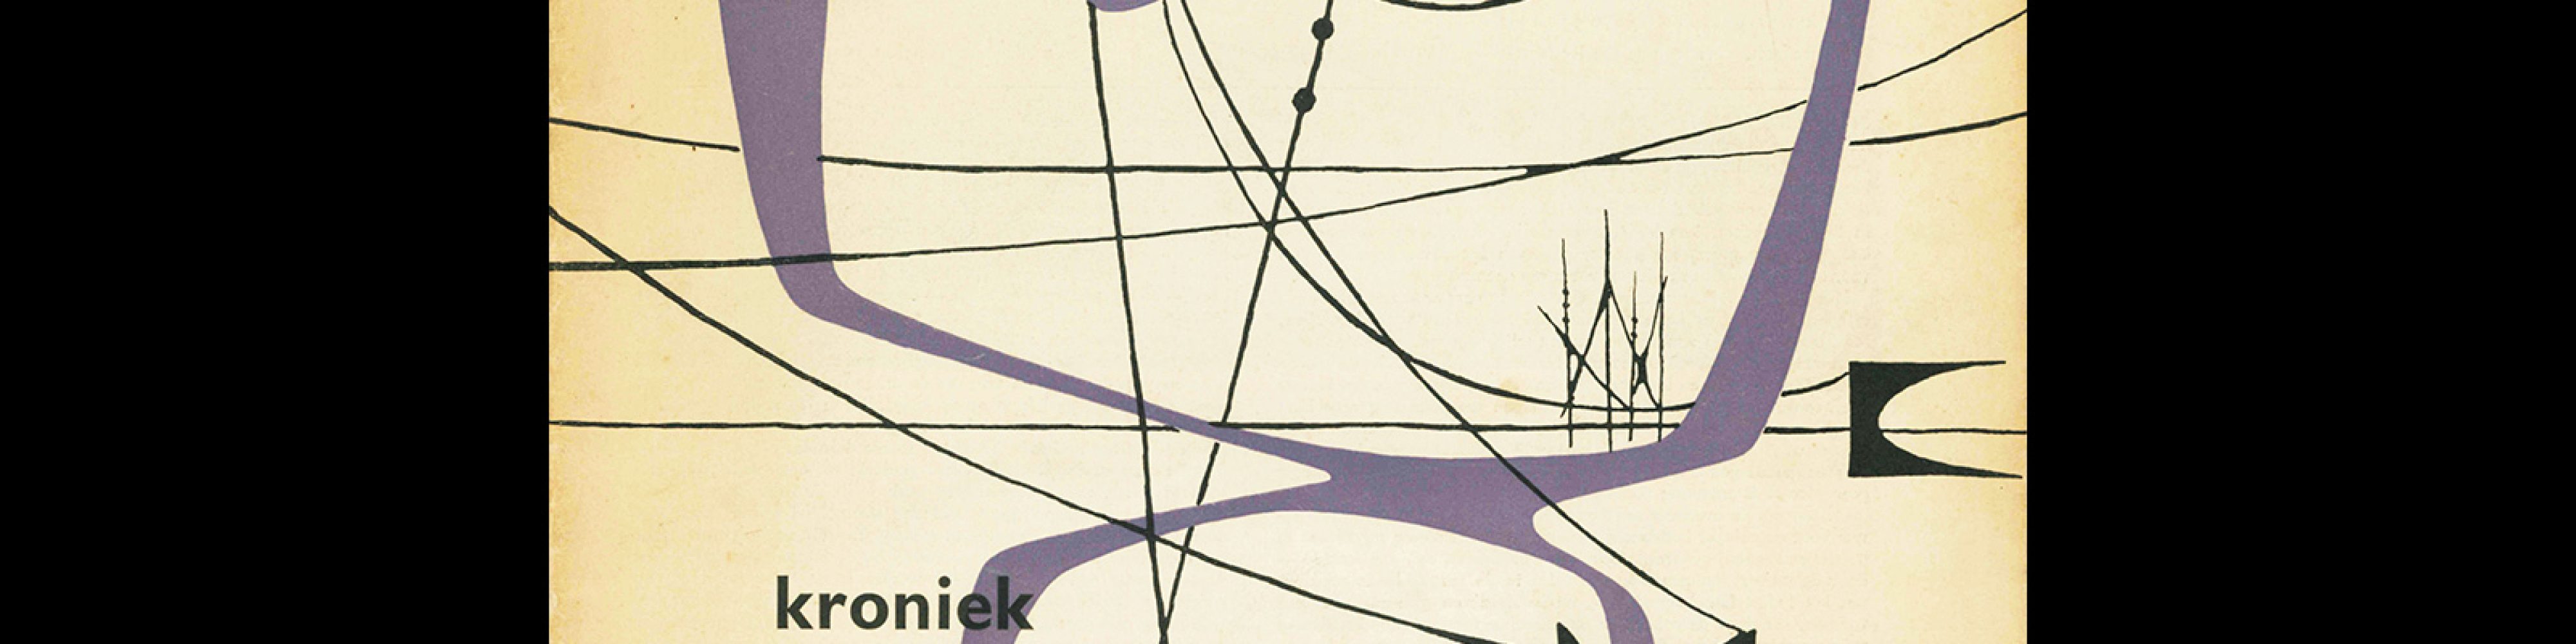 Kroniek van kunst en kultuur, 7, 1952. Cover design by Wim Crouwel